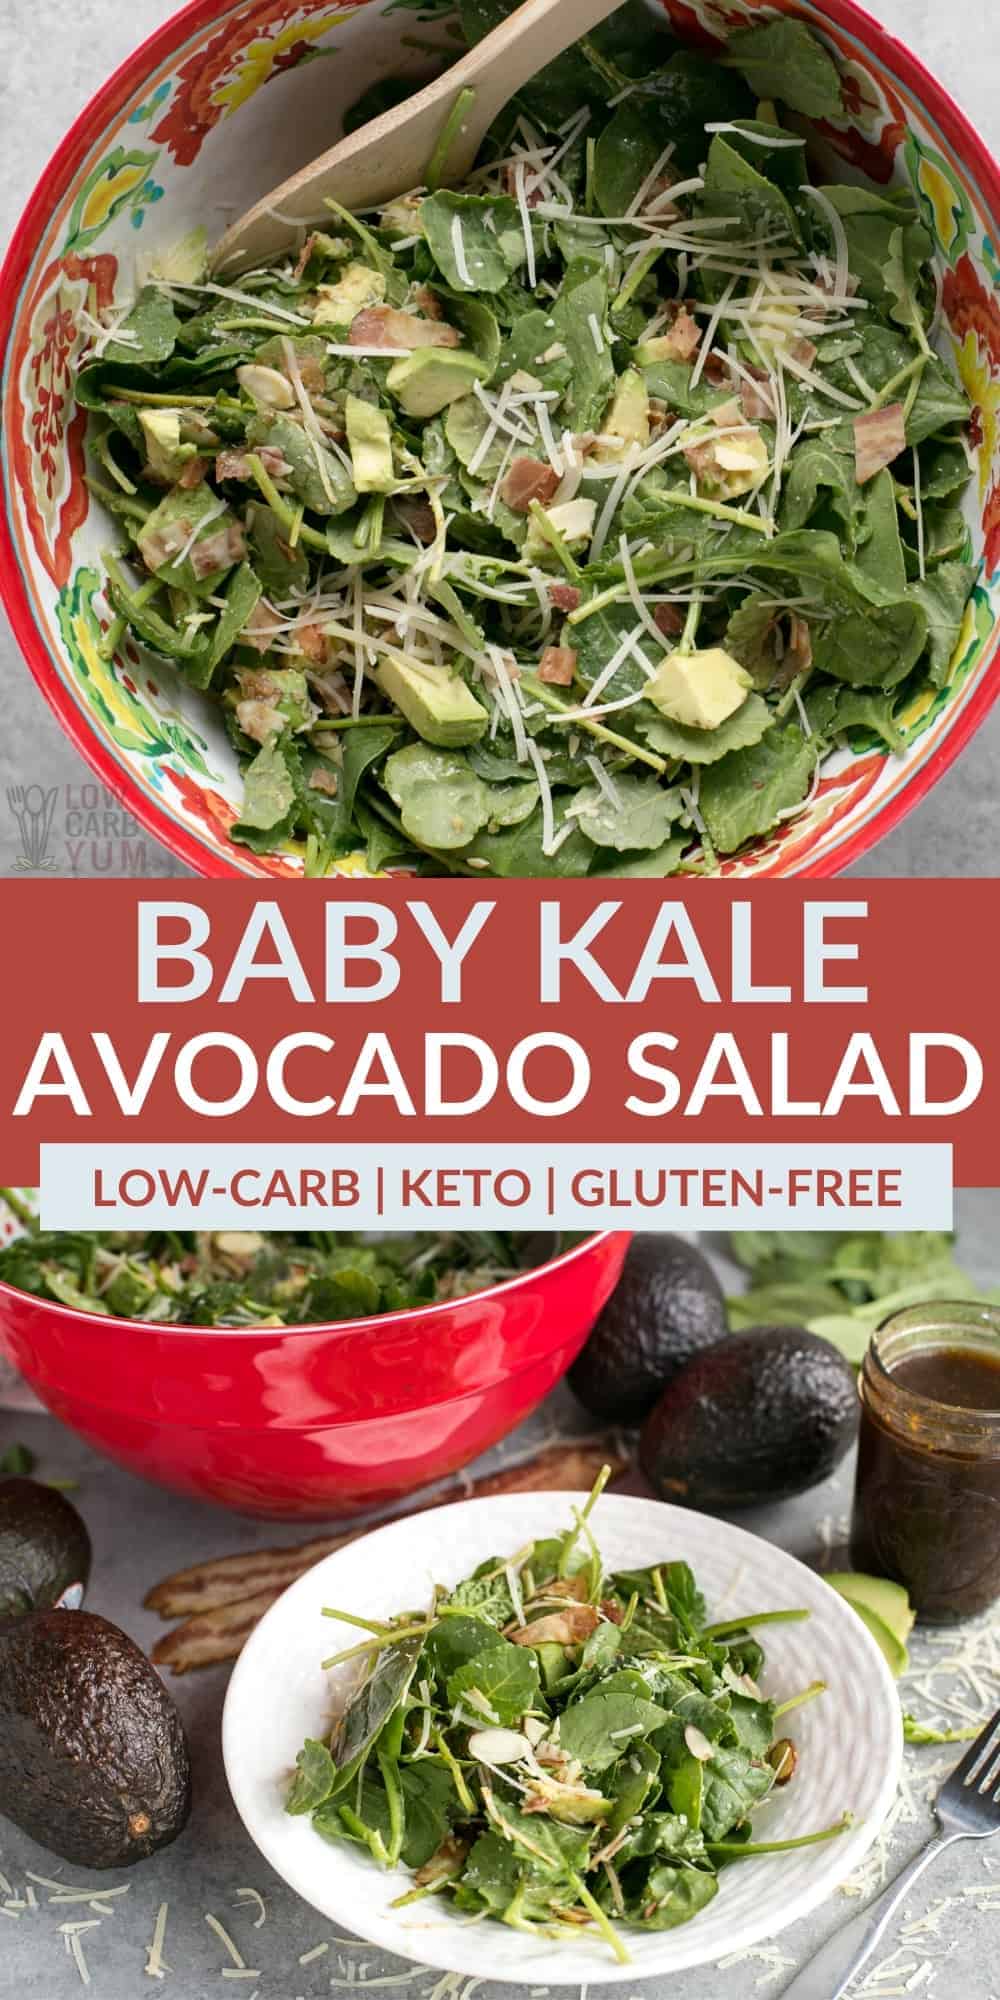 baby kale avocado salad pinterst image